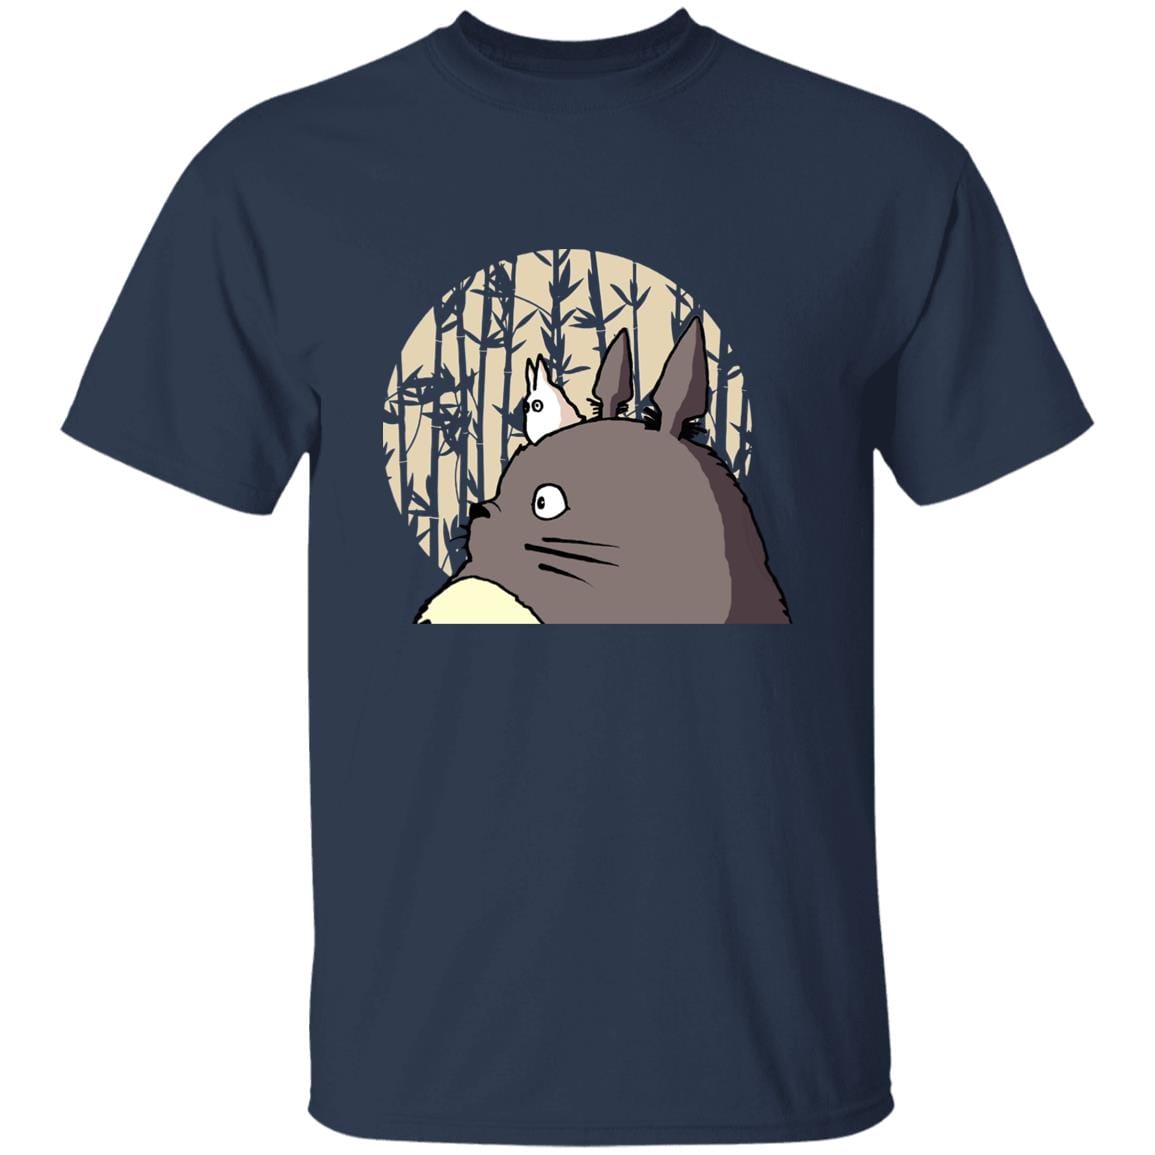 Oh-Totoro and Chibi-Totoro T Shirt Ghibli Store ghibli.store